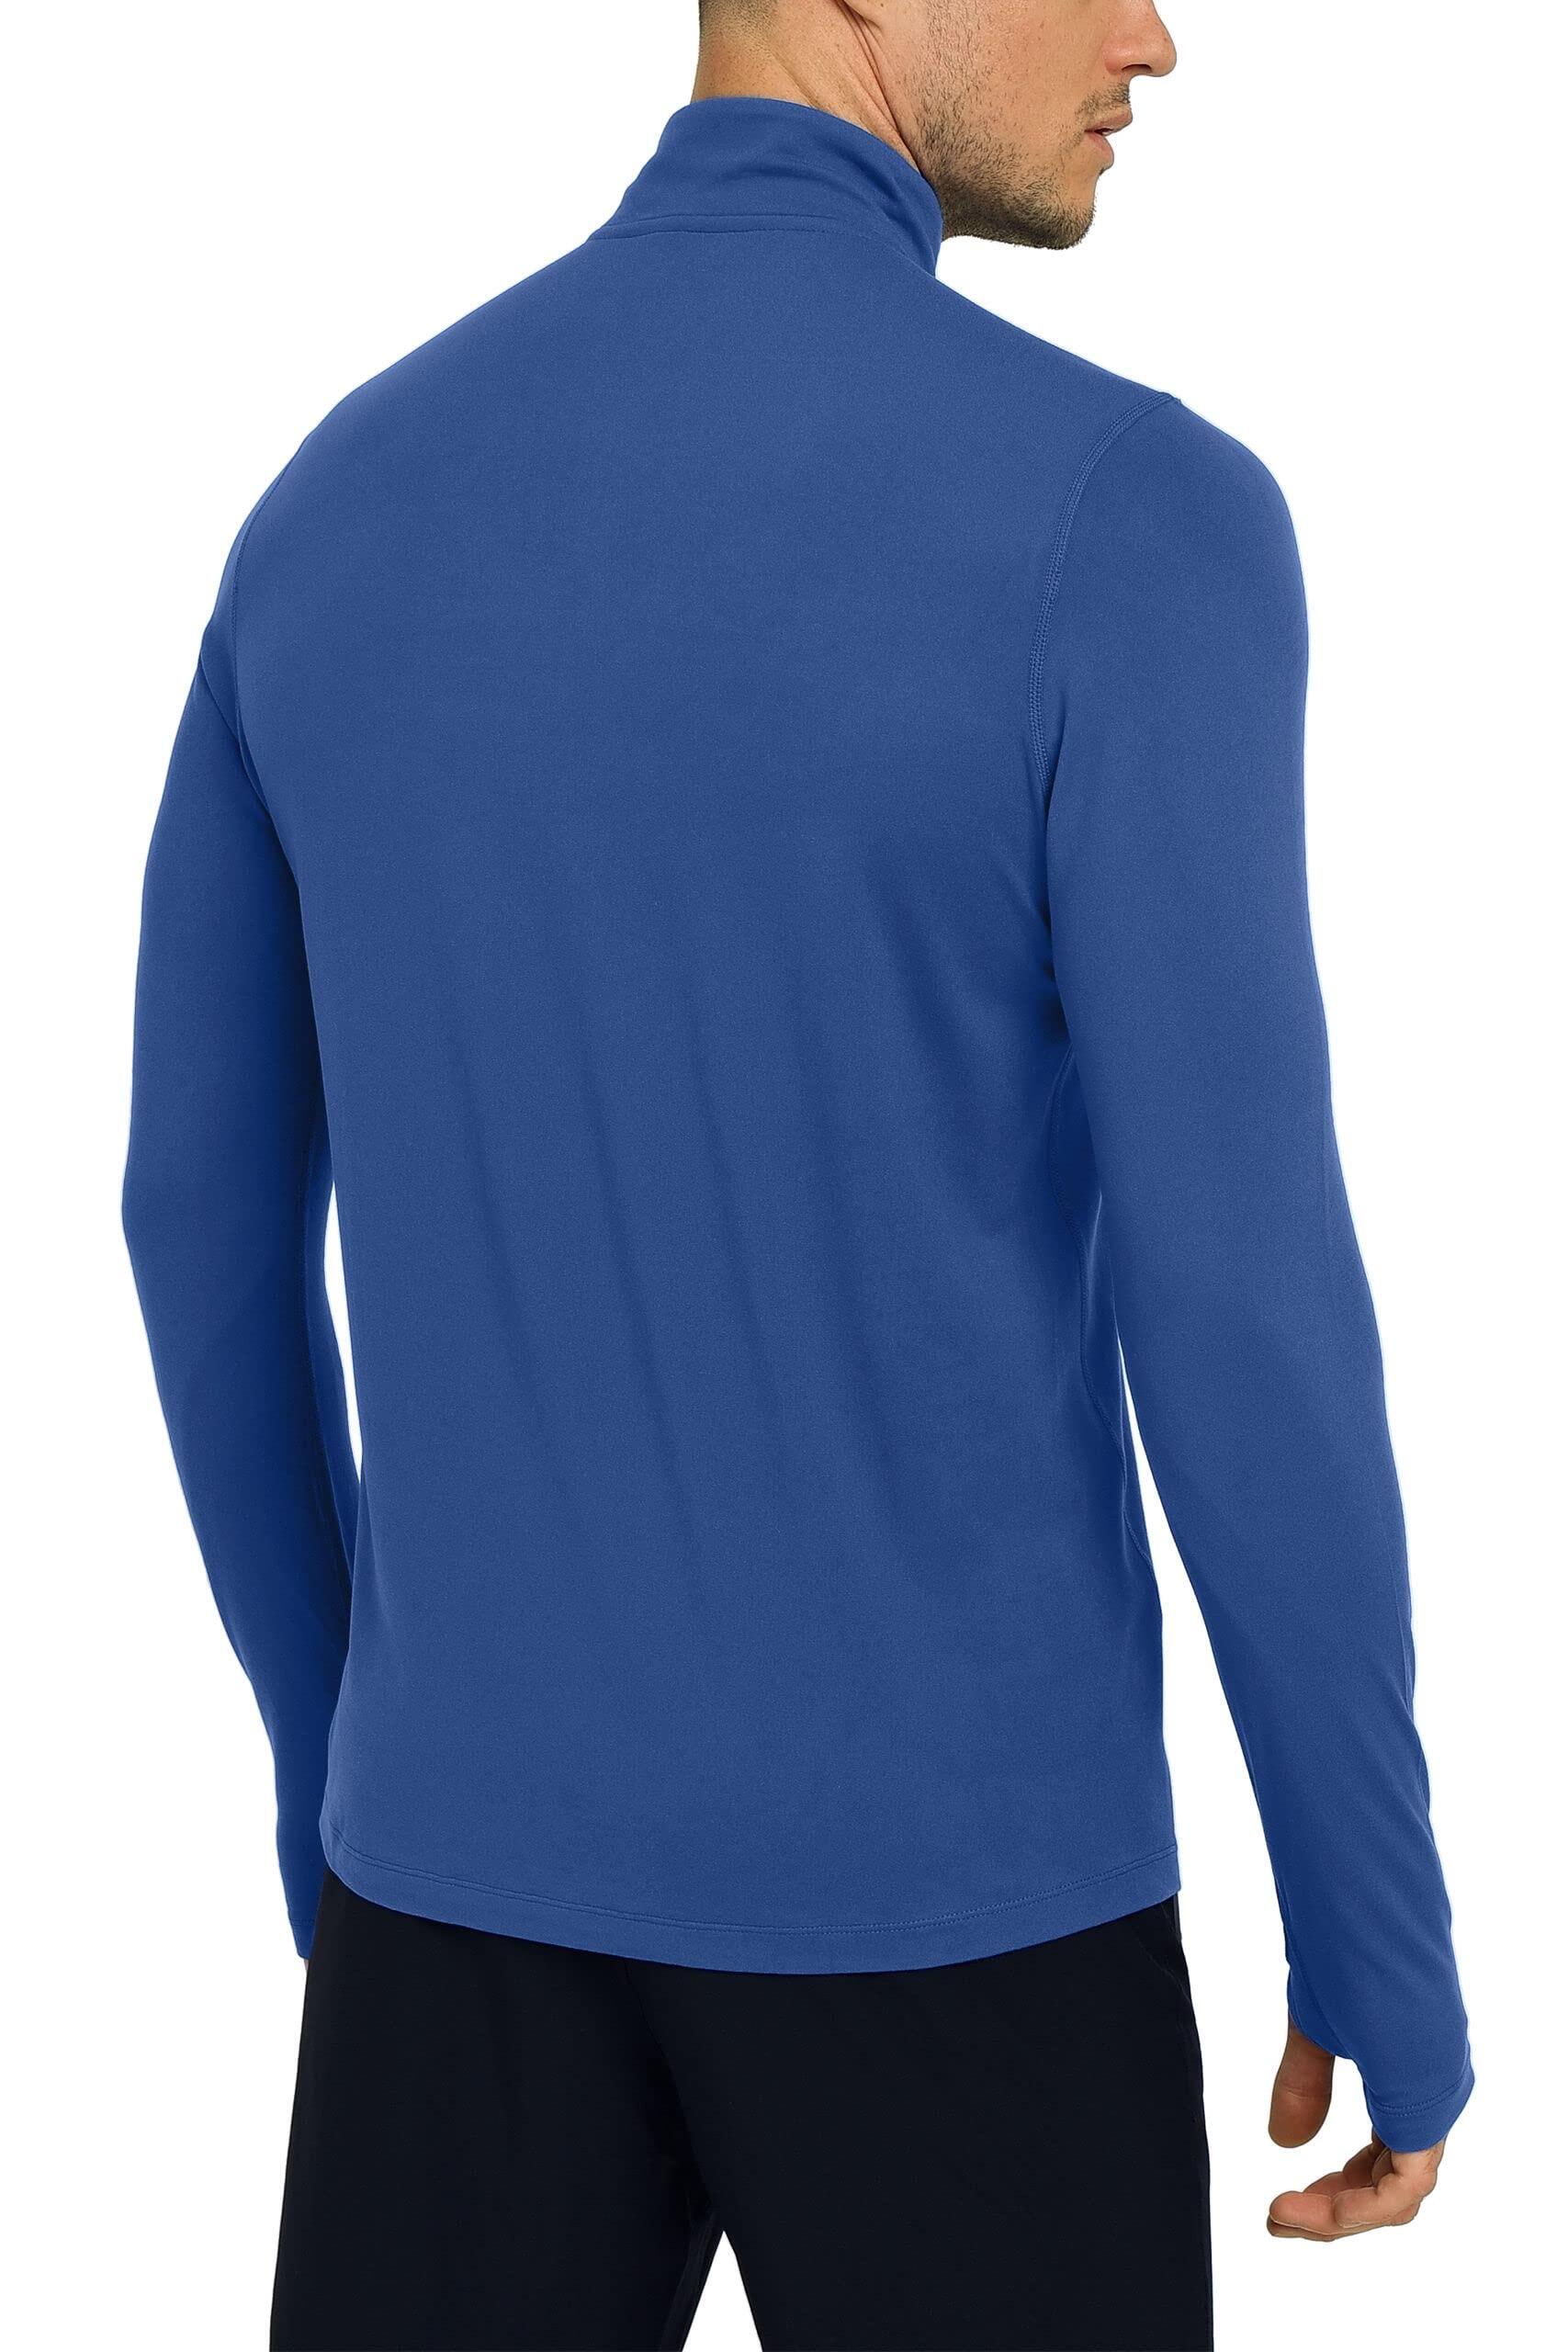 Men's Fusion Long Sleeve Half Zip Running Gym Top - True Blue 2/5